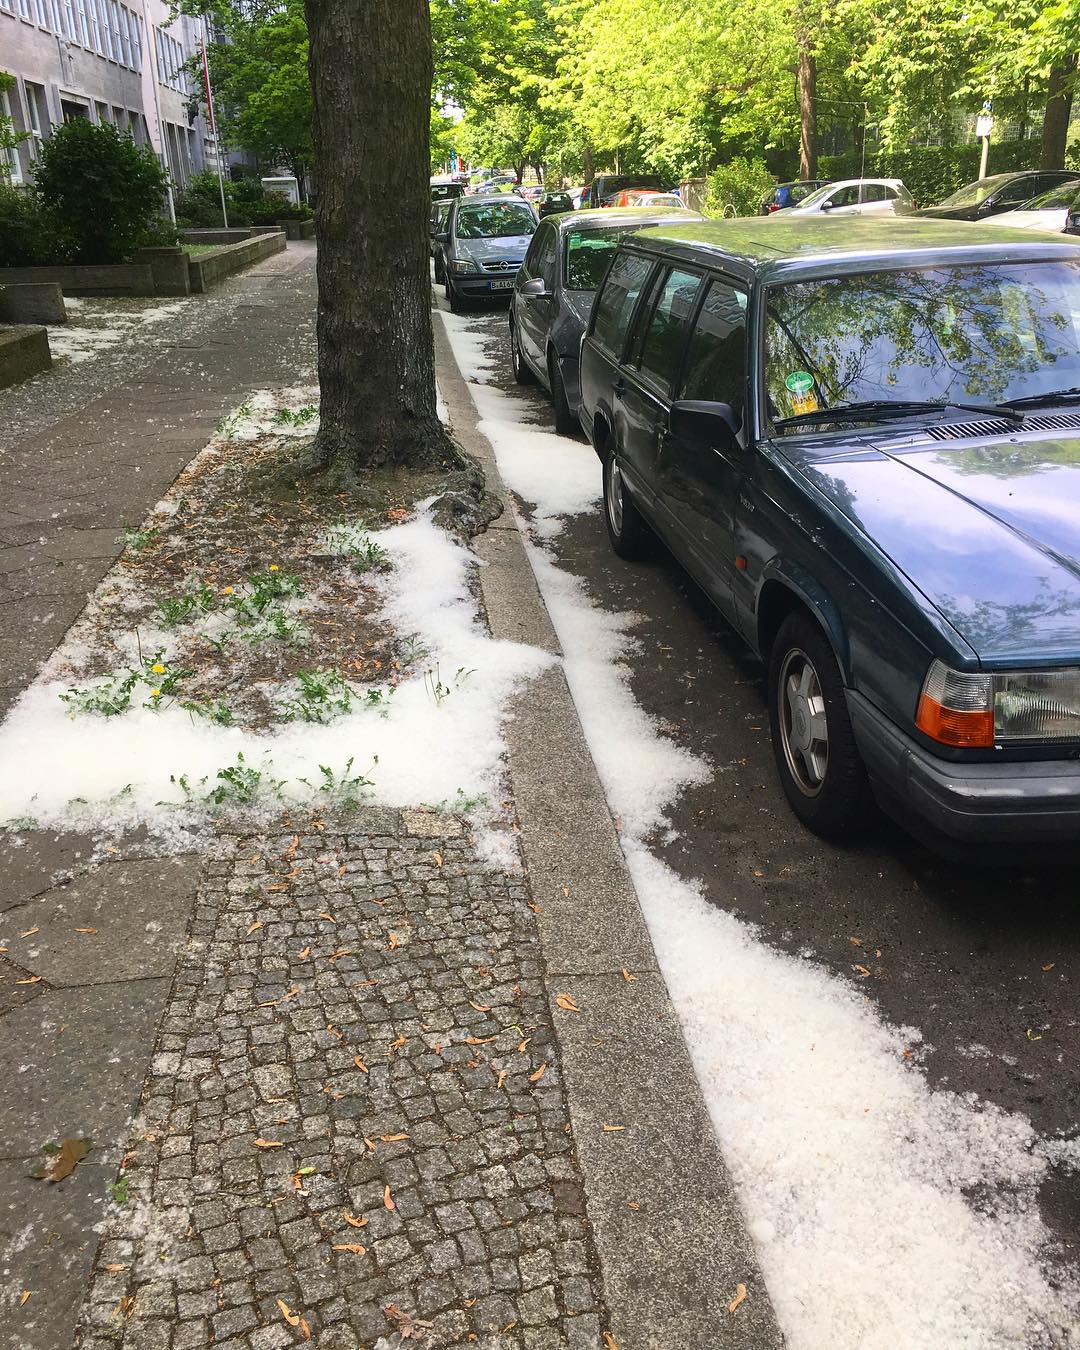 Download Kaligrafi Karya Kaligrafer Kristen In Berlin, it’s snowing also in summer …………………………. joking it…-Wissam